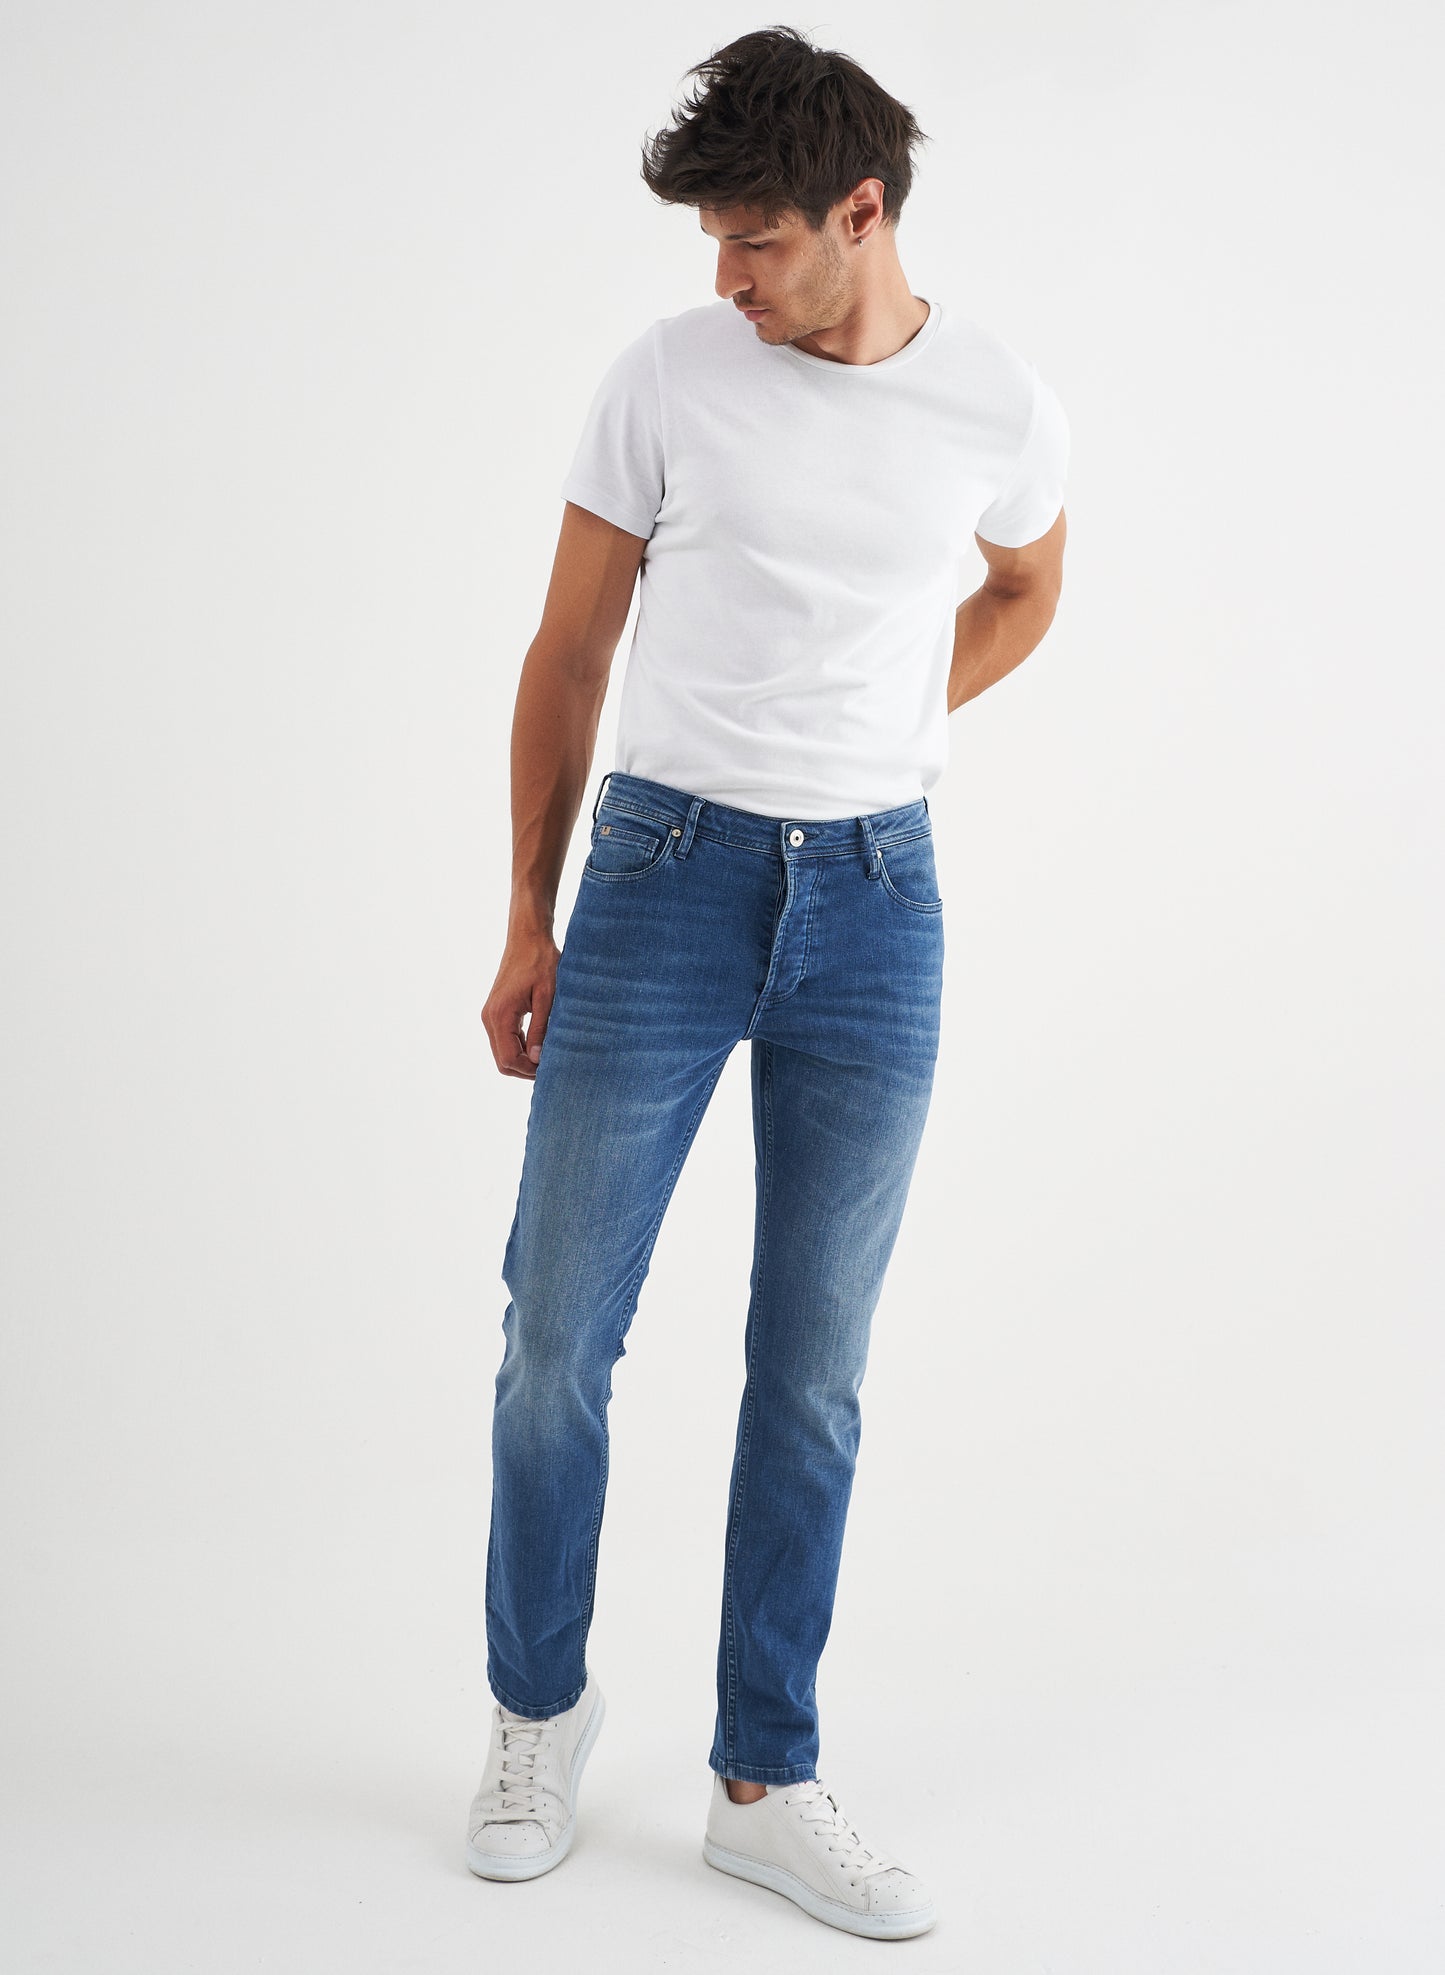 LEO - Straight Fit Denim Jeans Pant - Light Blue